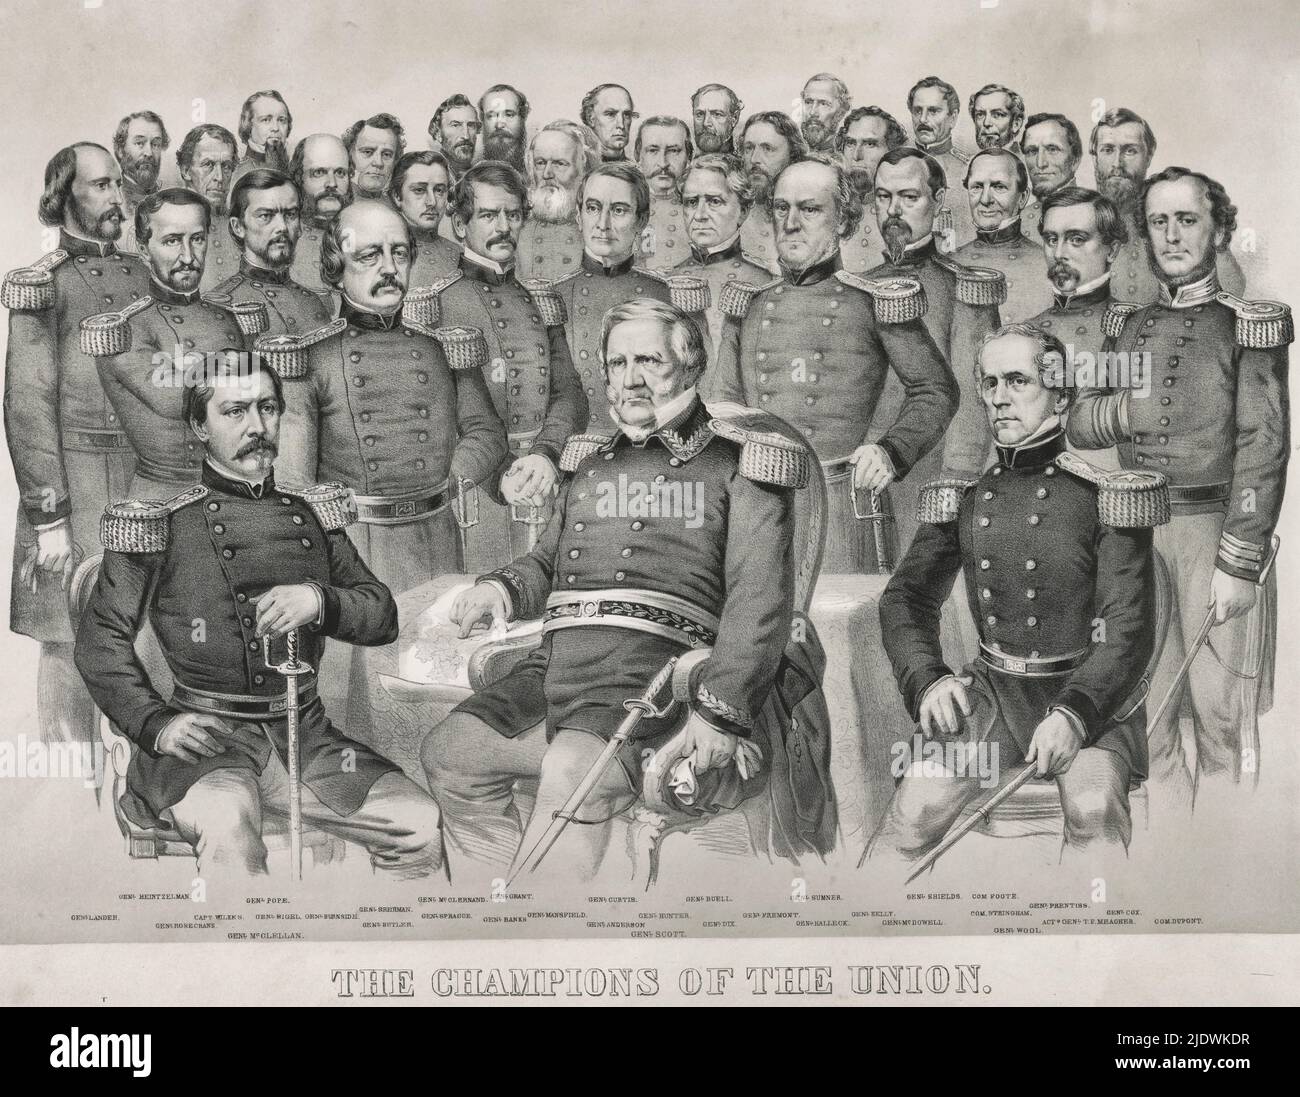 The champions of the Union. Print is a group portrait of Union Army generals and Navy commanders; caption identifies each man:  Genl. Heintzelman, Genl. Pope, Genl. Sherman [Thomas W.], Genl. McClernand, Genl. Grant, Genl. Curtis, , Genl. Buell, Genl. Sumner, Genl. Shields, Com. Foote, Genl. Lander, Capt. Wilkes, Genl. Sigel, Genl. Burnside, Genl. Sprague, Genl. Mansfield, Genl. Hunter, Genl. Fremont, Genl. Kelly, Com. Stringham, Genl. Prentiss, Genl. Cox, Genl. Rosecrans, Genl. Butler, Genl. Banks, Genl. Anderson, Genl. Dix, Genl. Halleck, Genl. McDowell, Act. Genl. T. F. Meagher, Com. Dupont Stock Photo